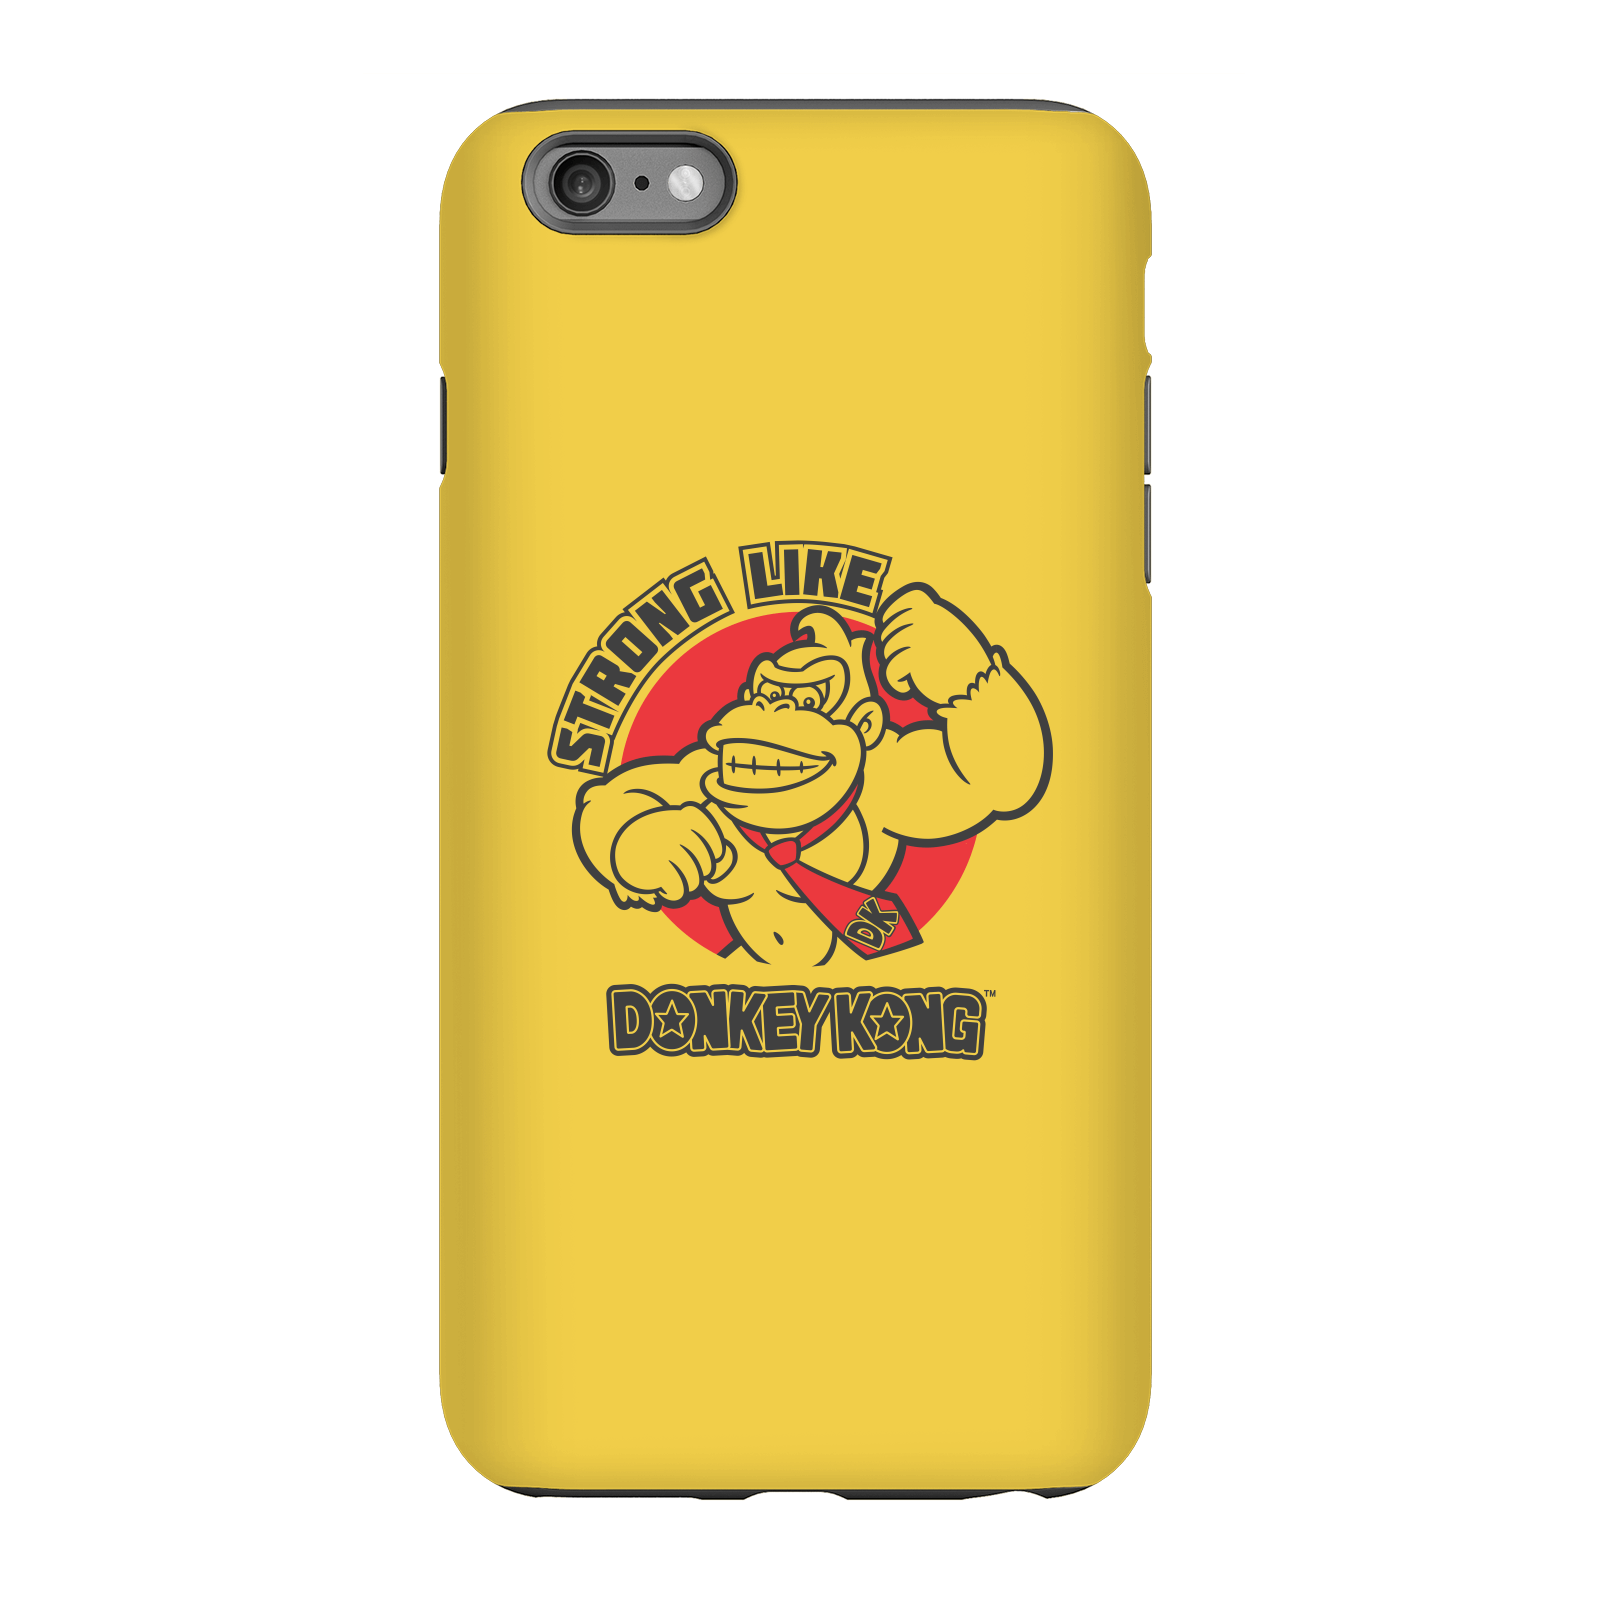 Nintendo Donkey Kong Strong Like Donkey Kong Phone Case - iPhone 6 Plus - Tough Case - Gloss